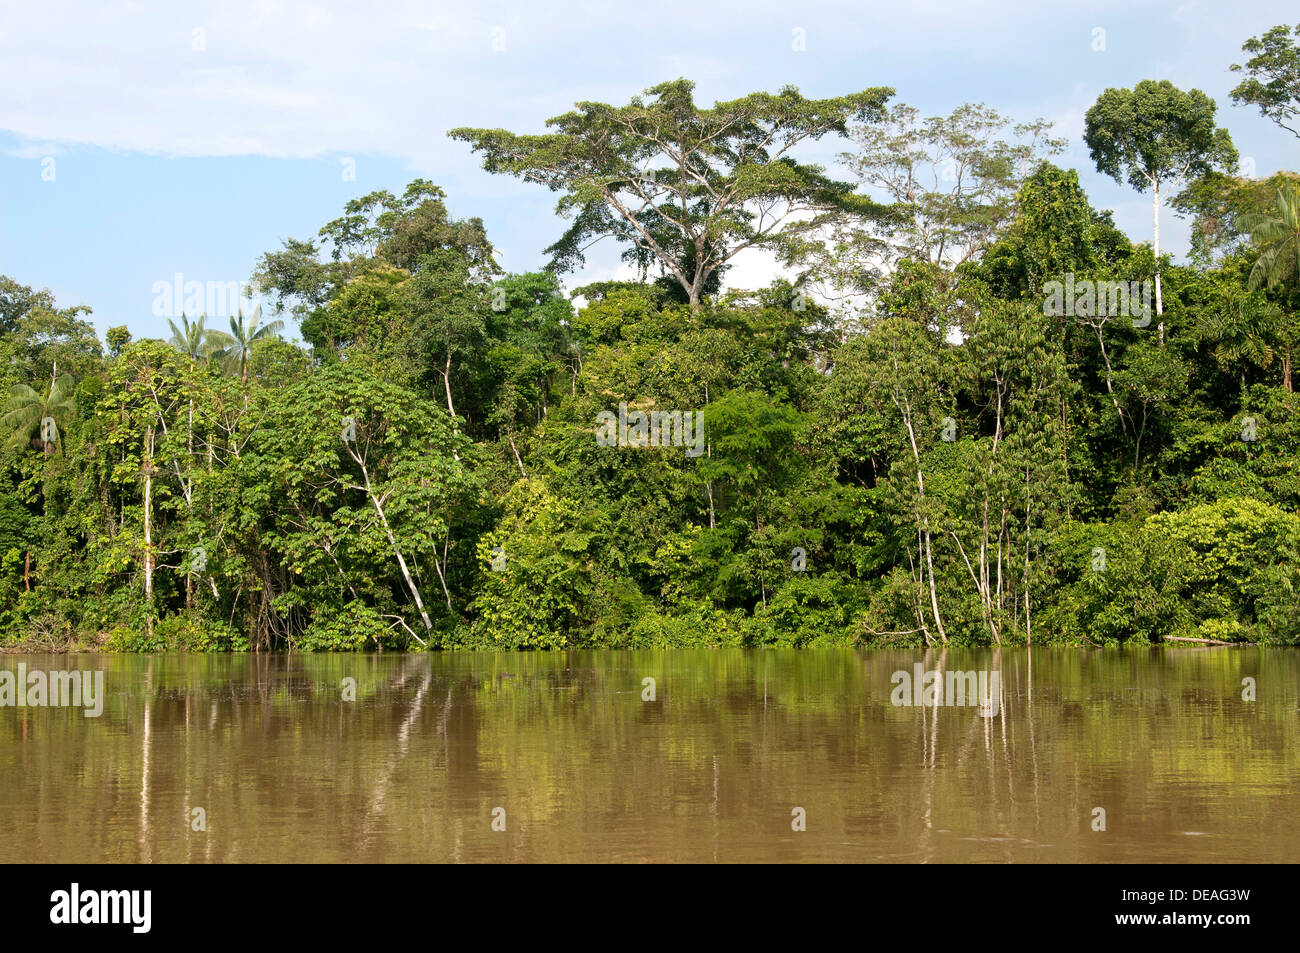 Gallery forest along the bank of the Tiputini River, Yasuni National Park, Amazon basin, Ecuador, South America Stock Photo